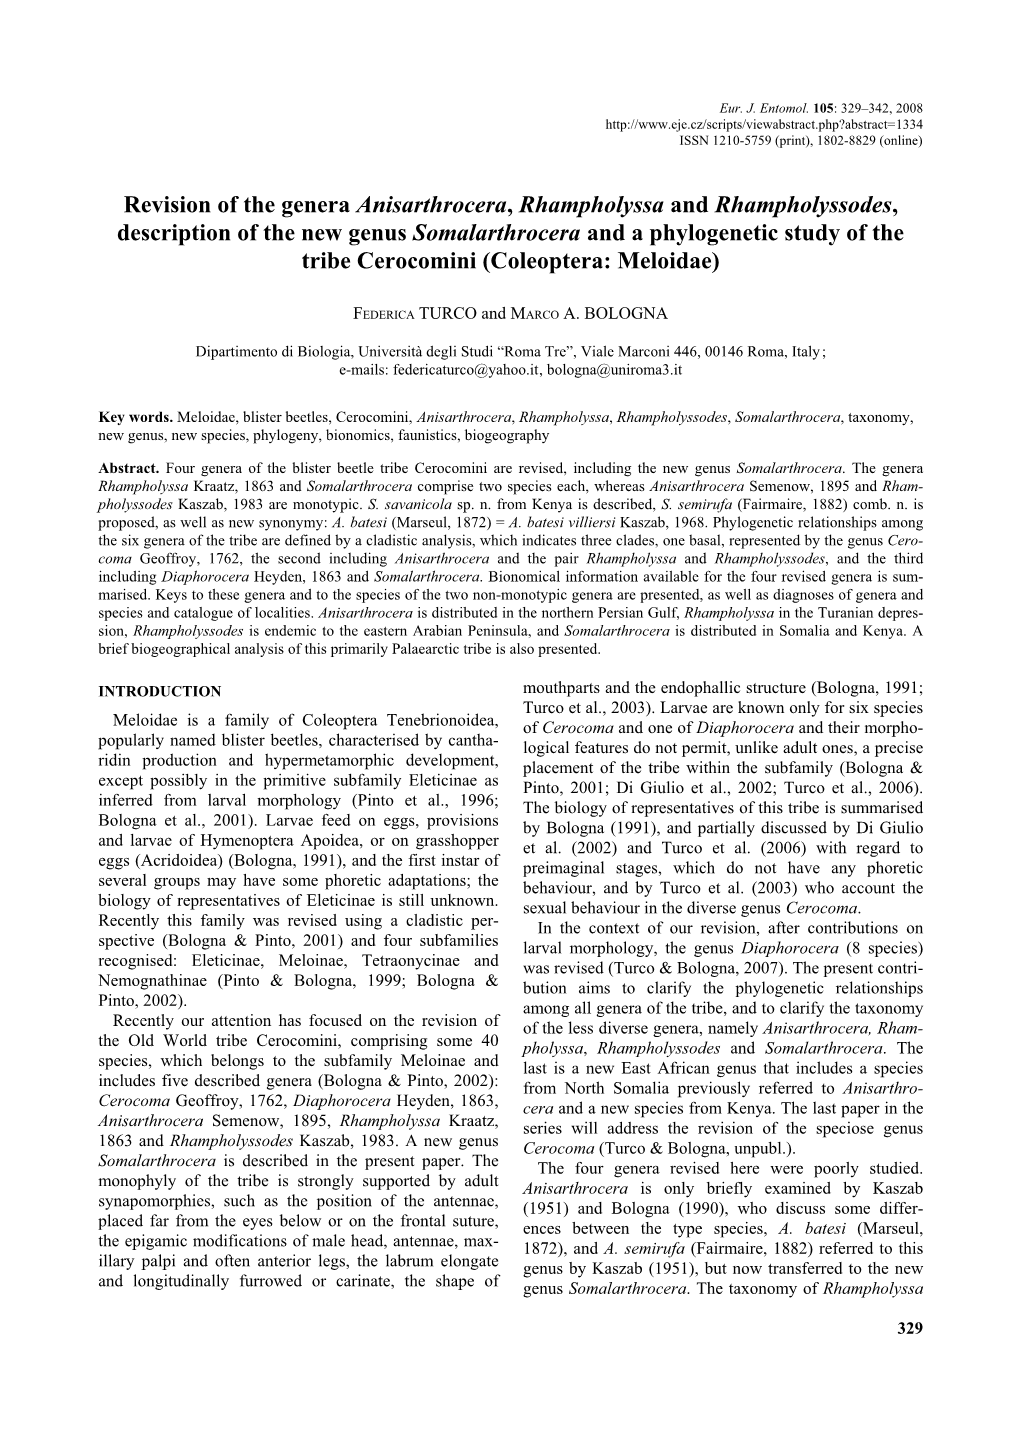 Revision of the Genera Anisarthrocera, Rhampholyssa And